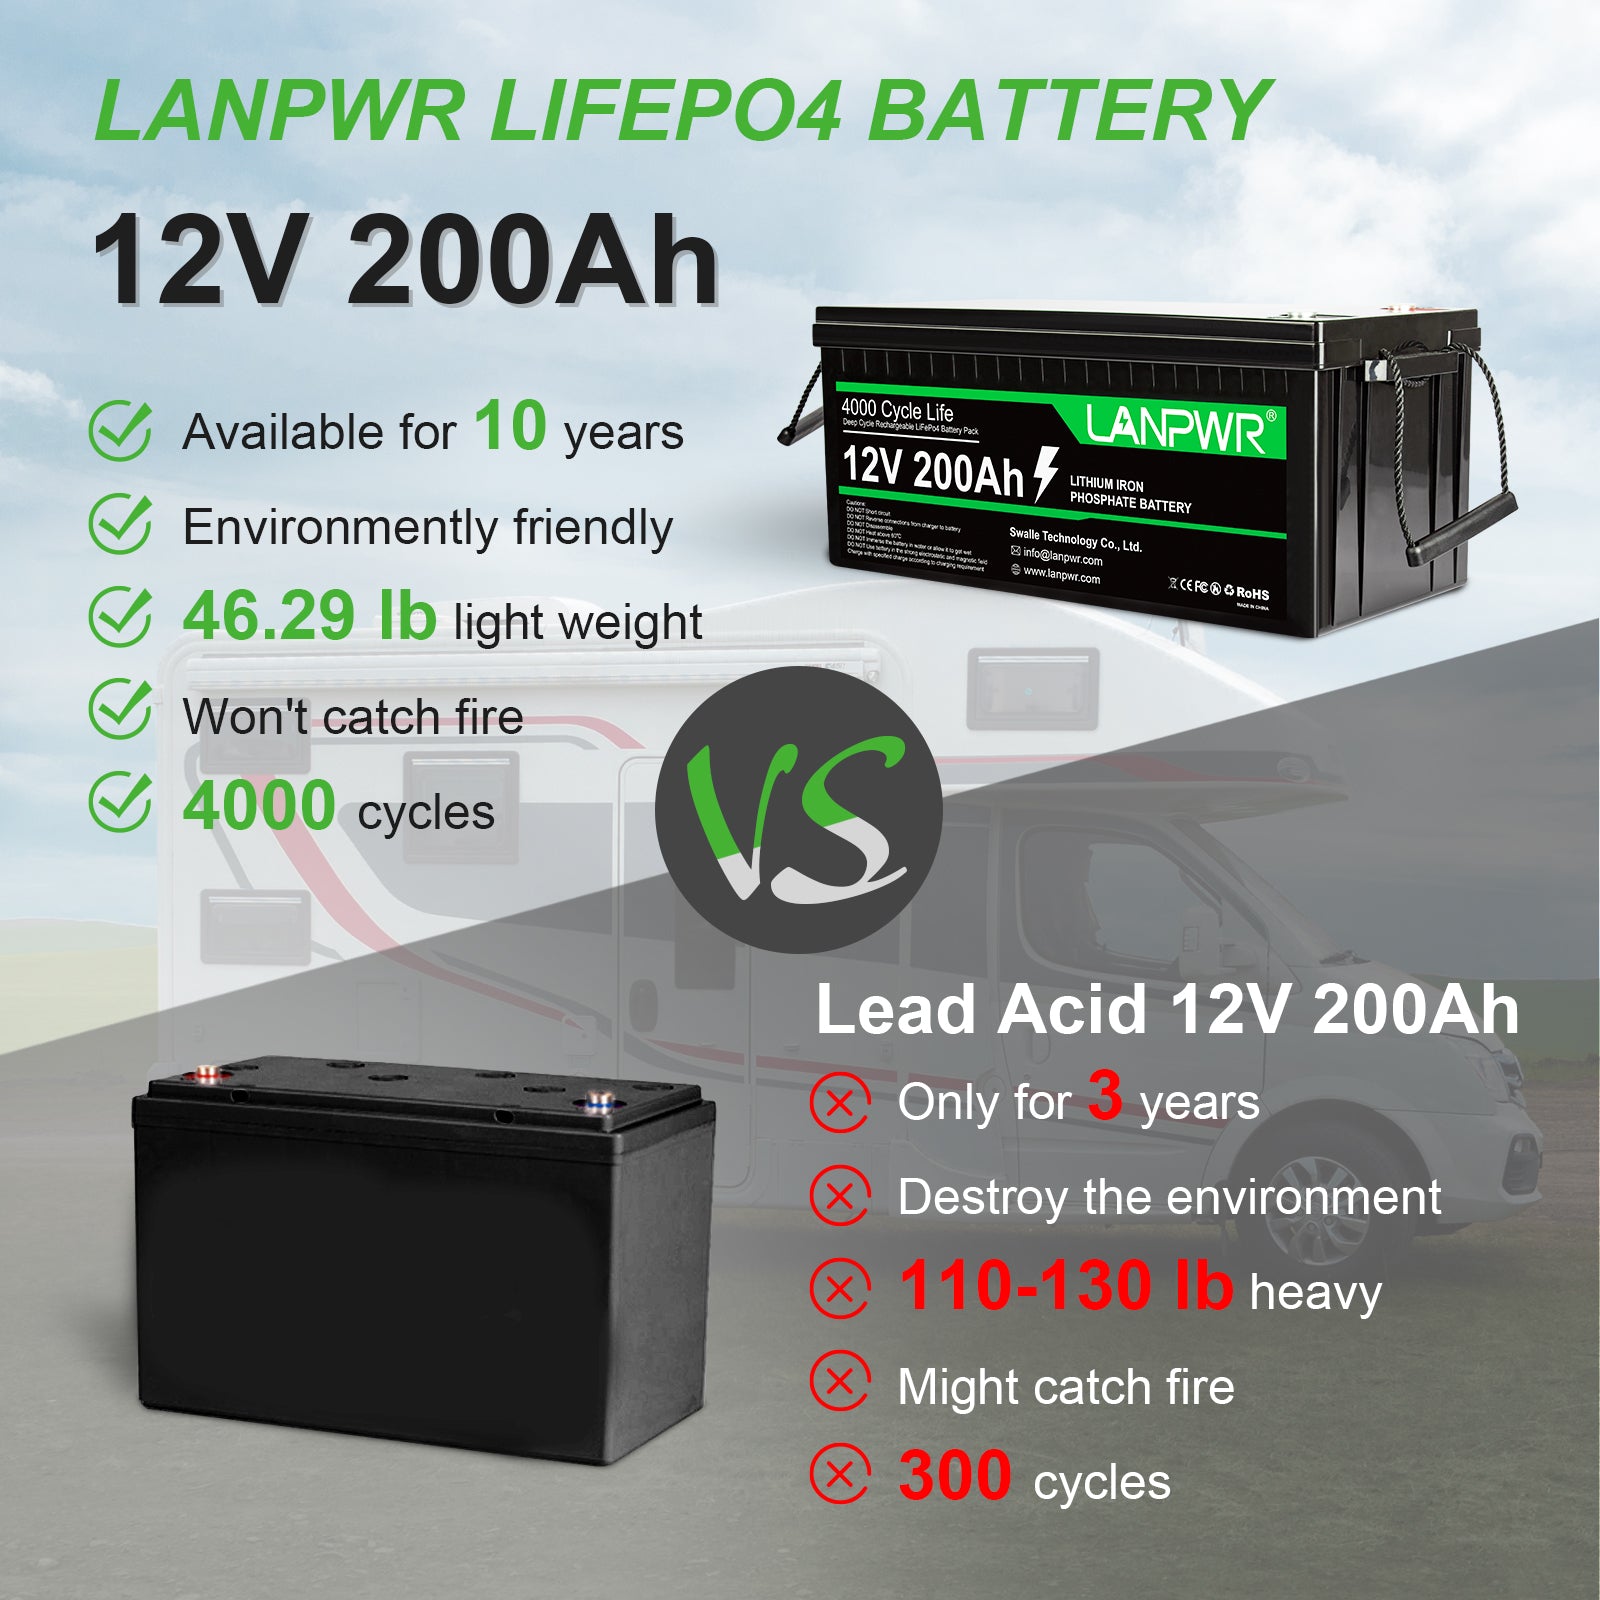 LANPWR 12V 200Ah LiFePO4 Batterie, Eingebauter 200A BMS, 2560Wh Energie